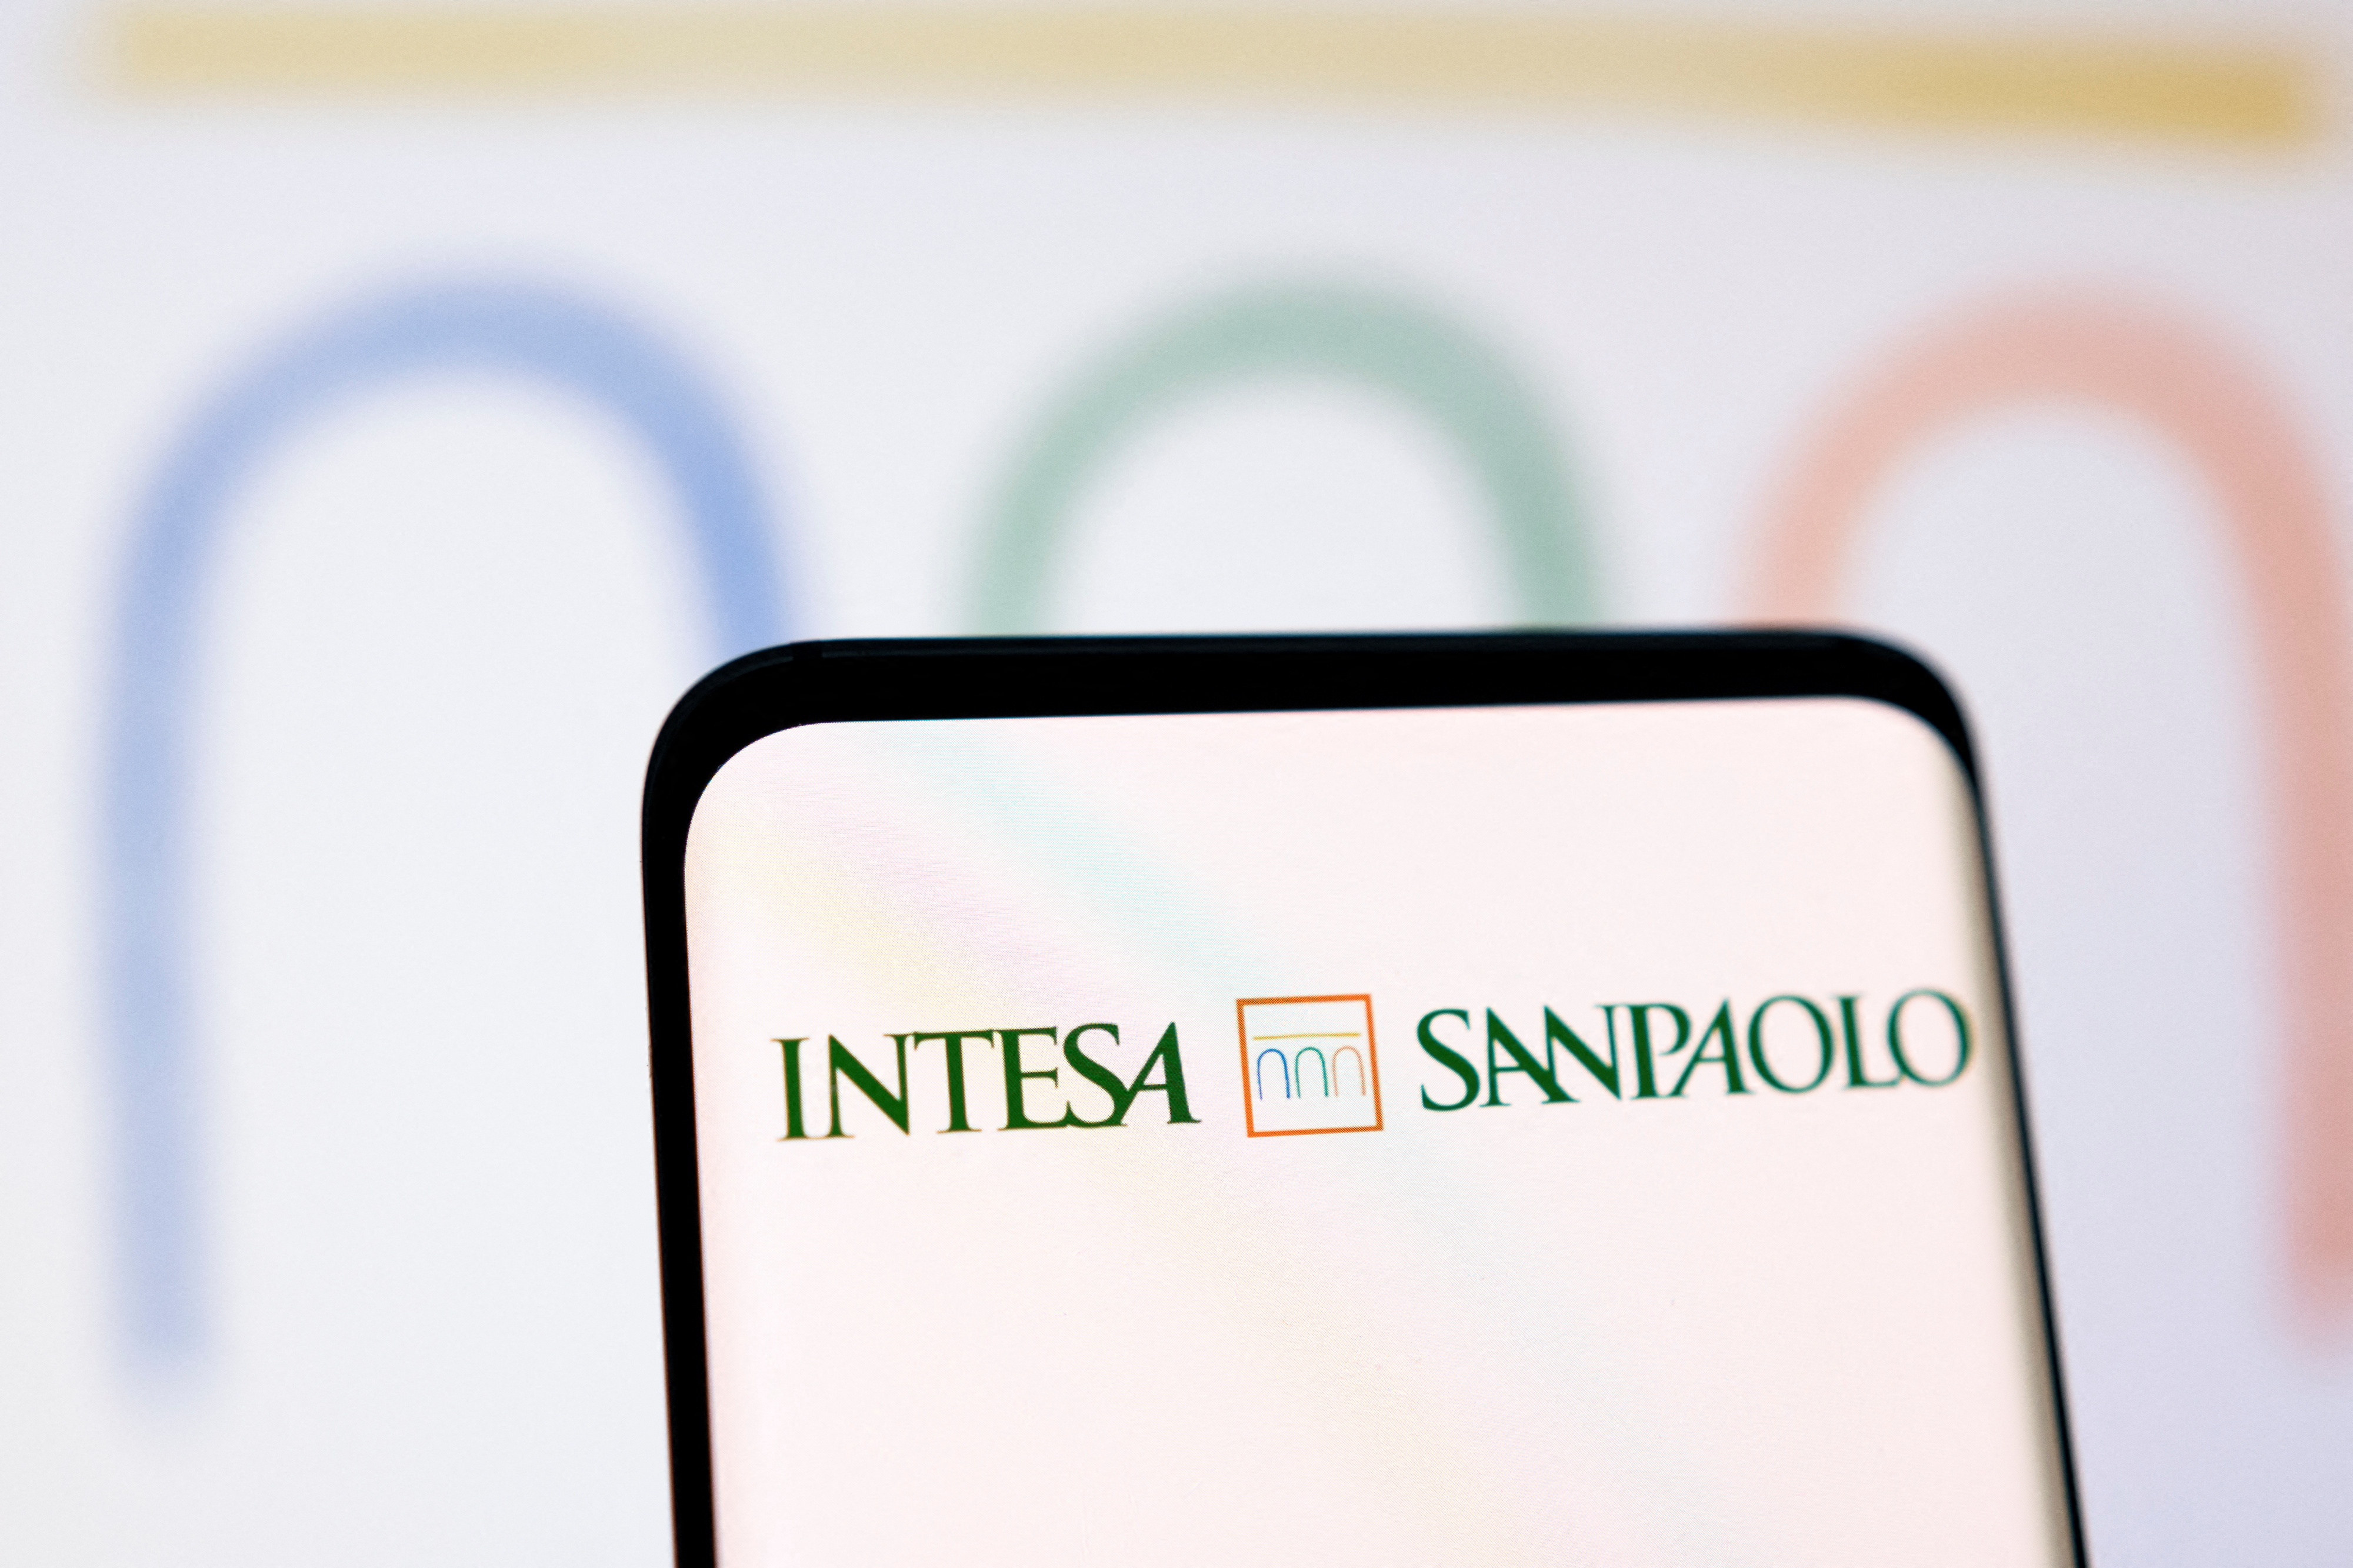 Illustration shows Intesa Sanpaolo bank logo